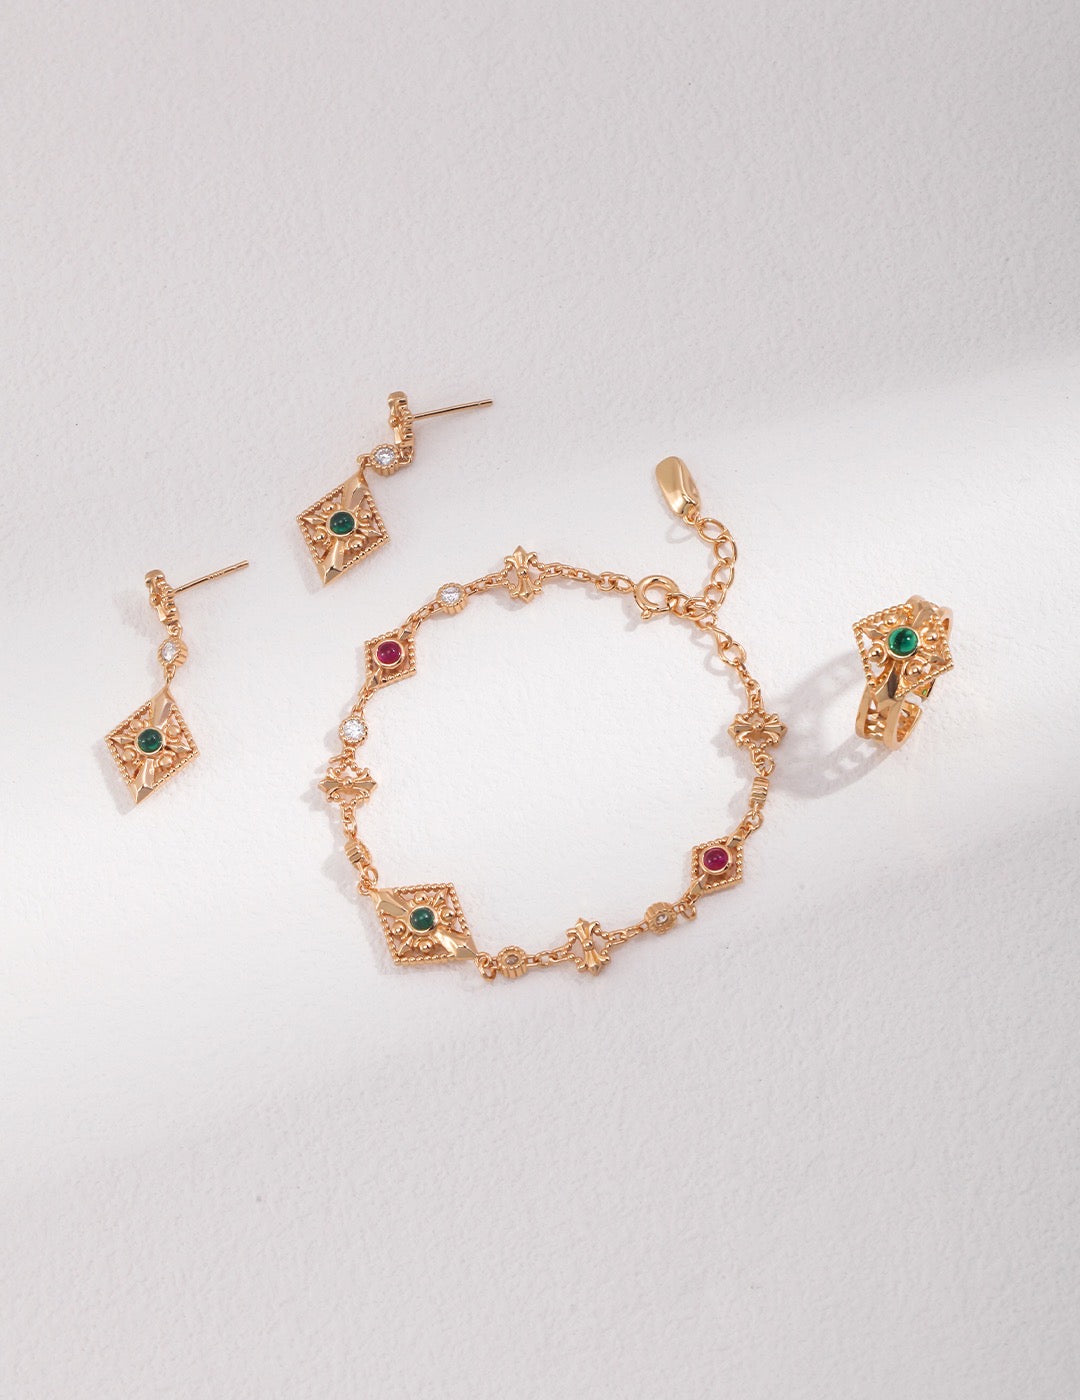 Ancient Roman Bracelet | Gold bracelet | Silver bracelet |